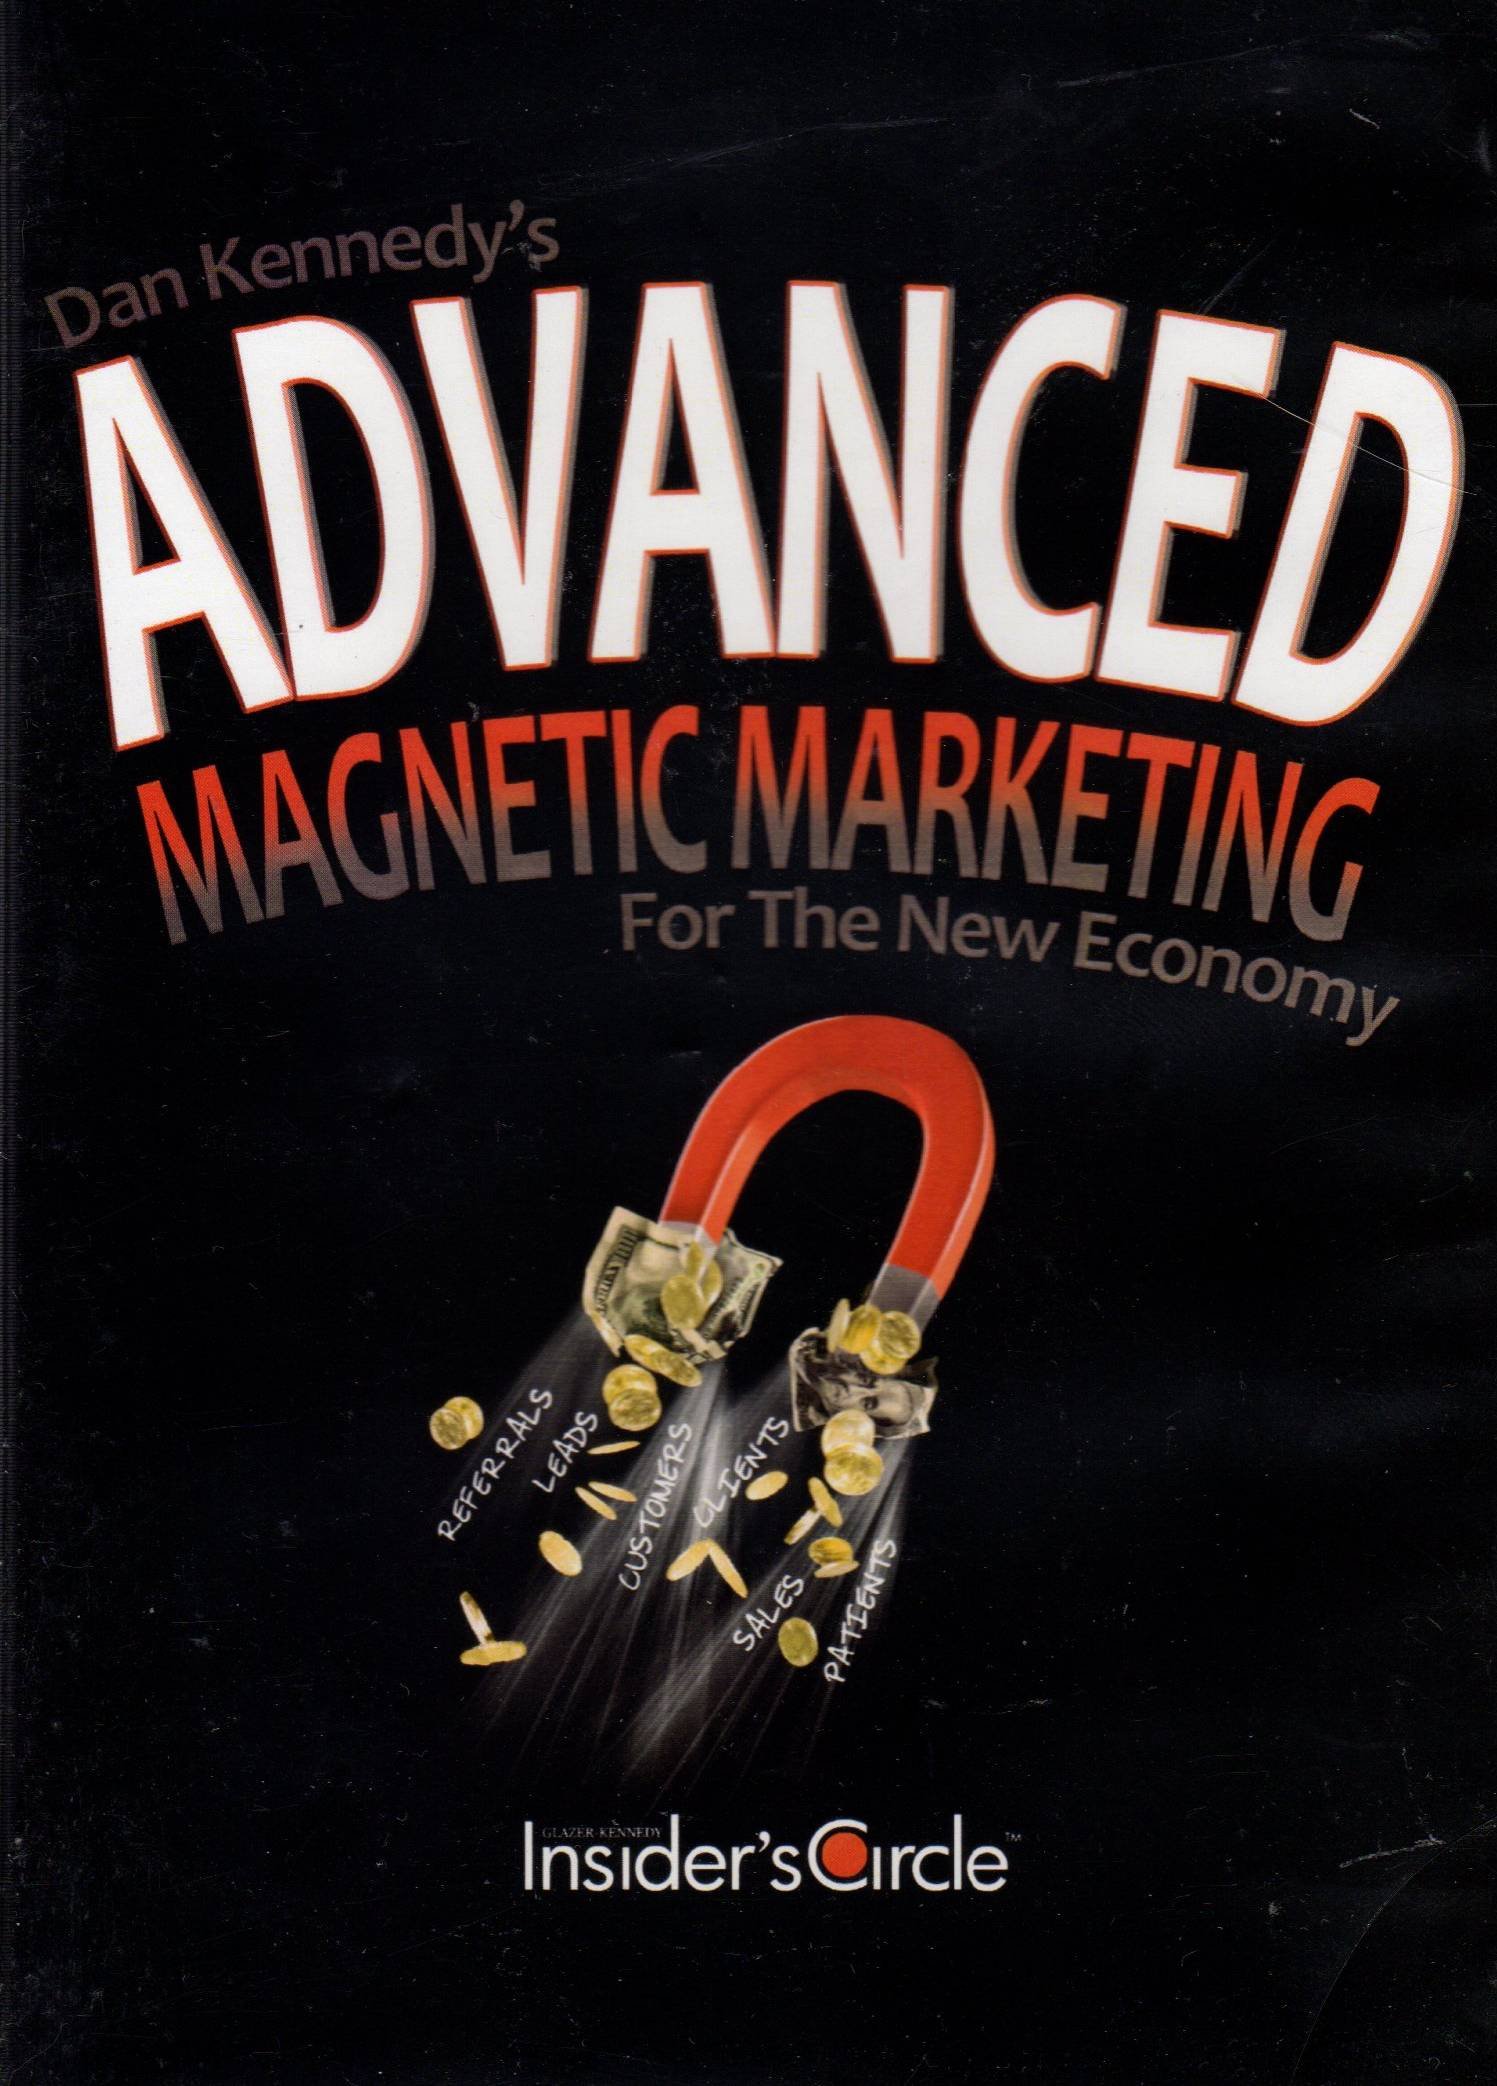 Dan Kennedy - Advanced Magnetic Marketing